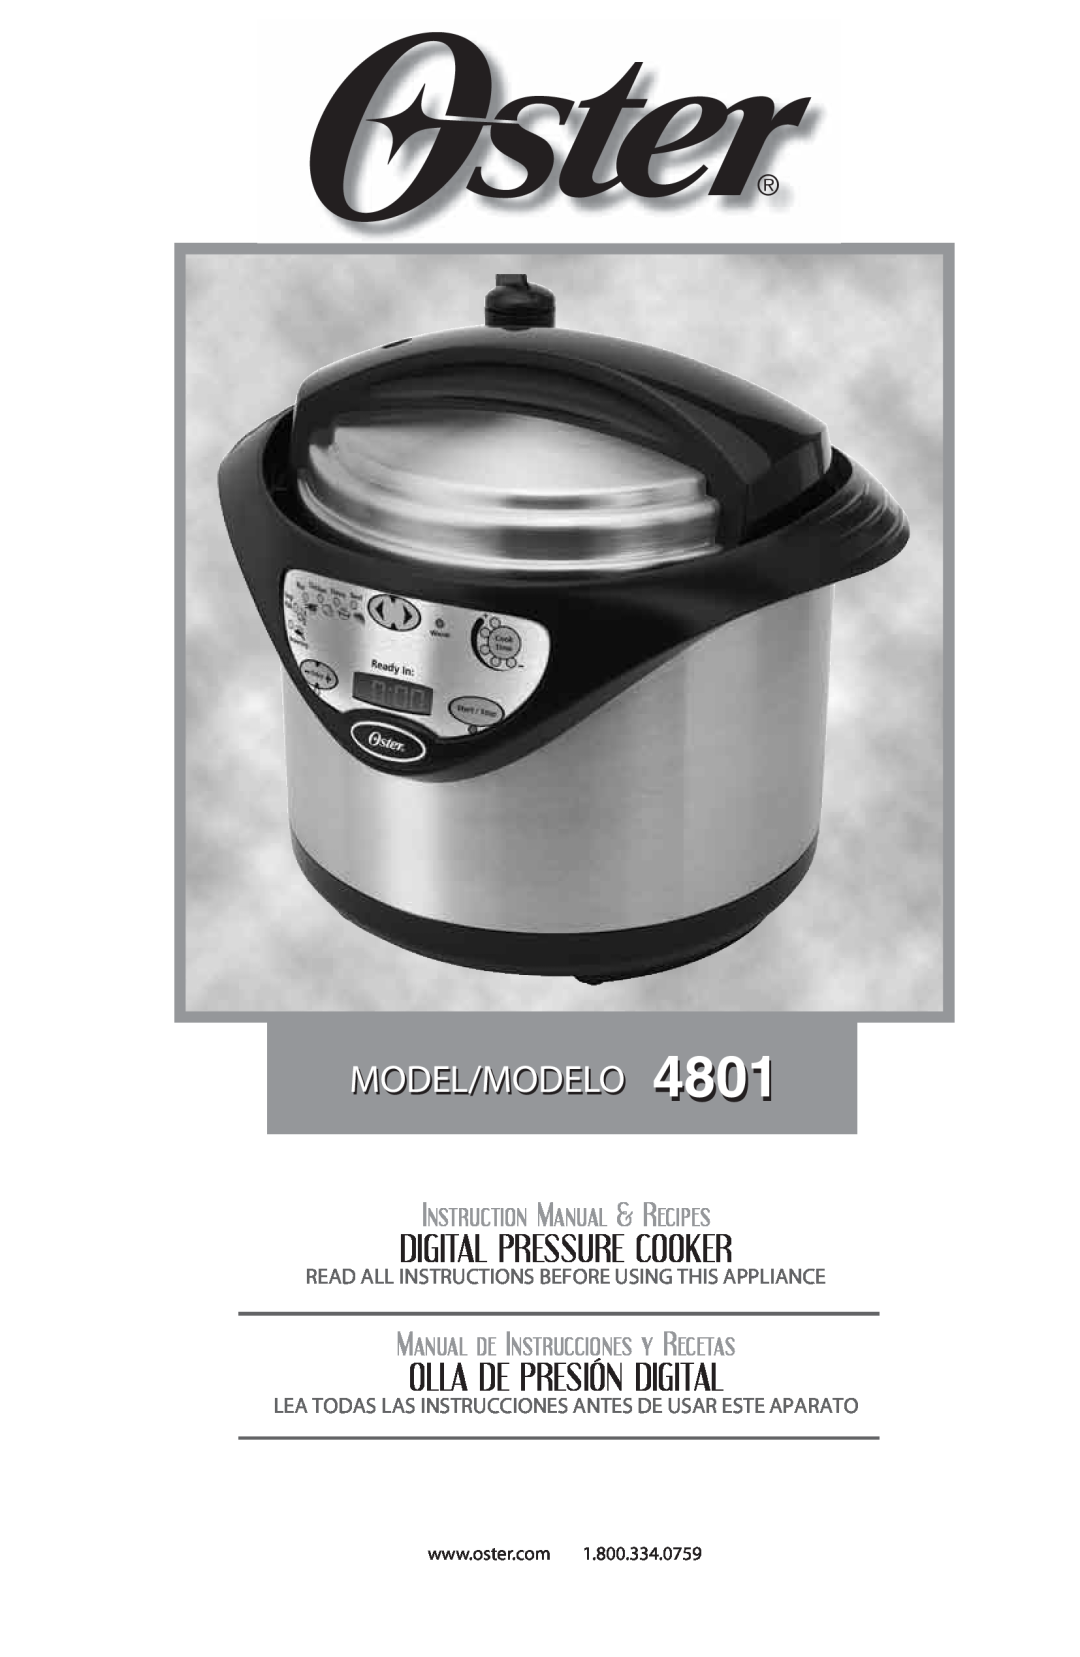 Oster Oster Digital Pressure Cooker, 4801 instruction manual Model/Modelo, Manual De Instrucciones Y Recetas 